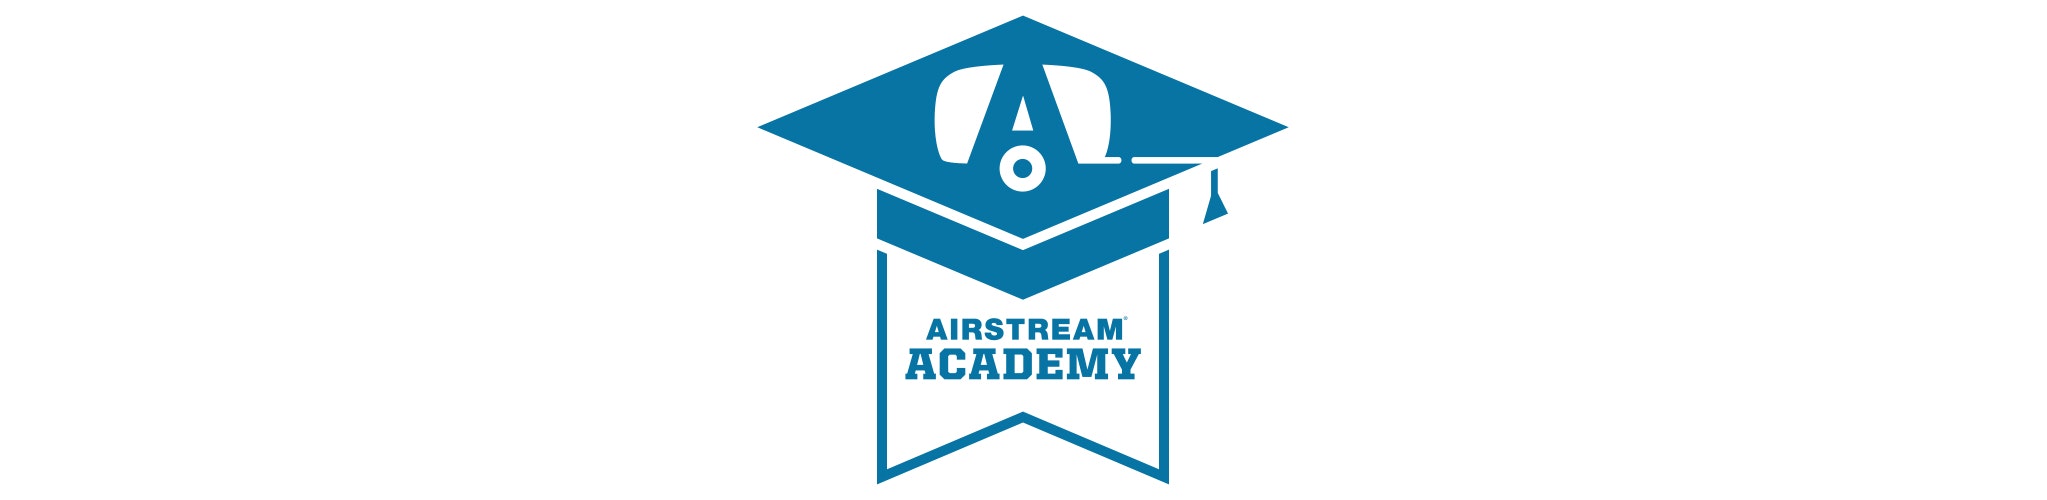 Airstream Academy